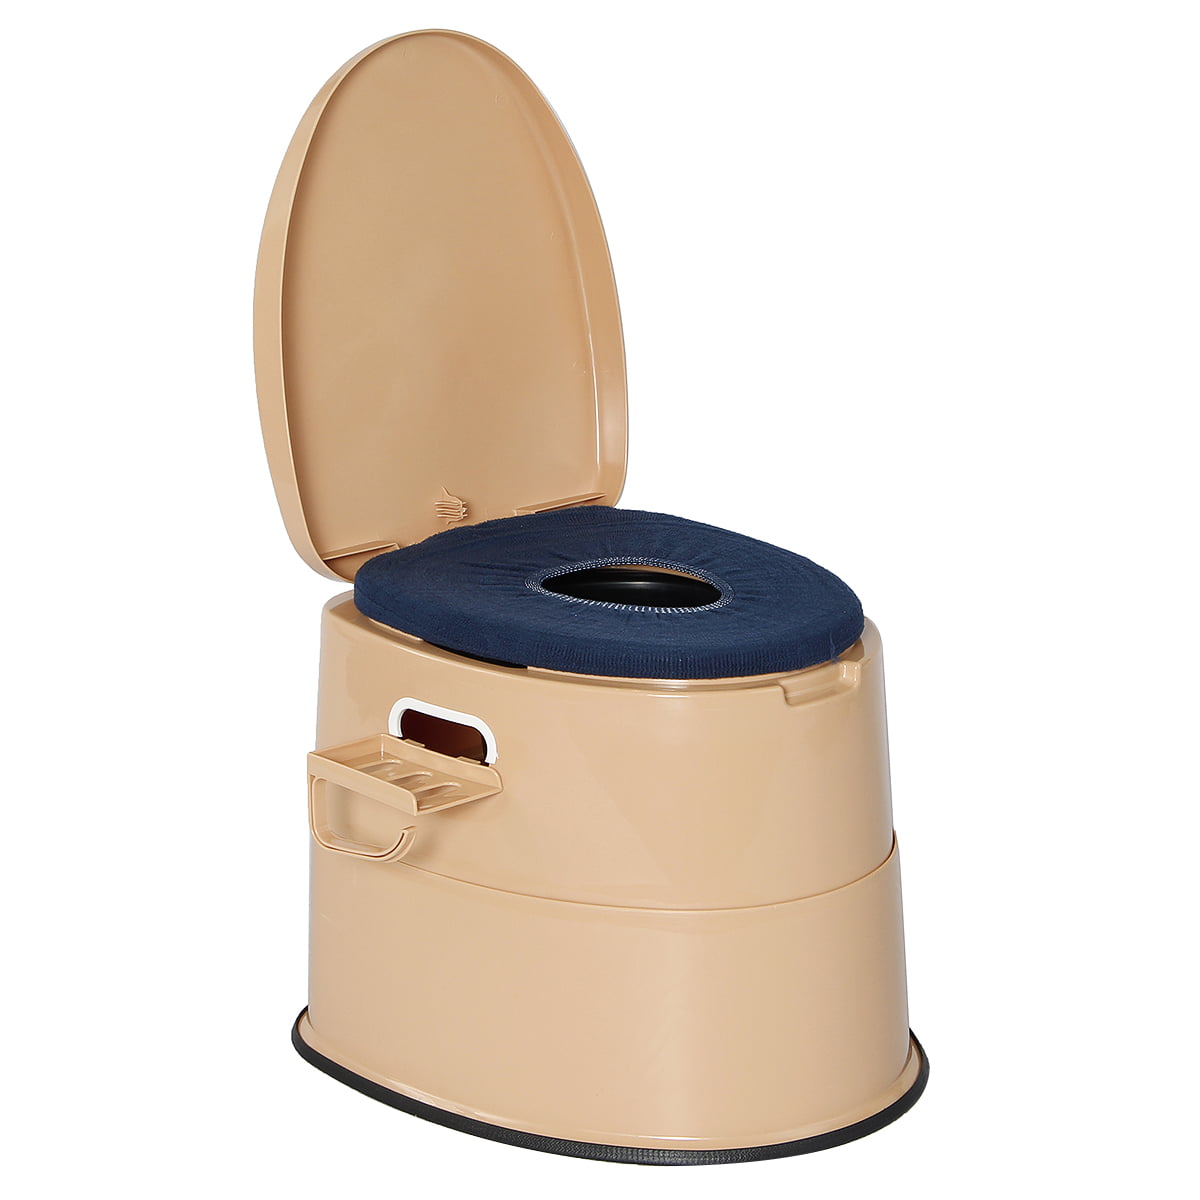 Portable Travel Toilet Compact Potty Bucket Seats w ...